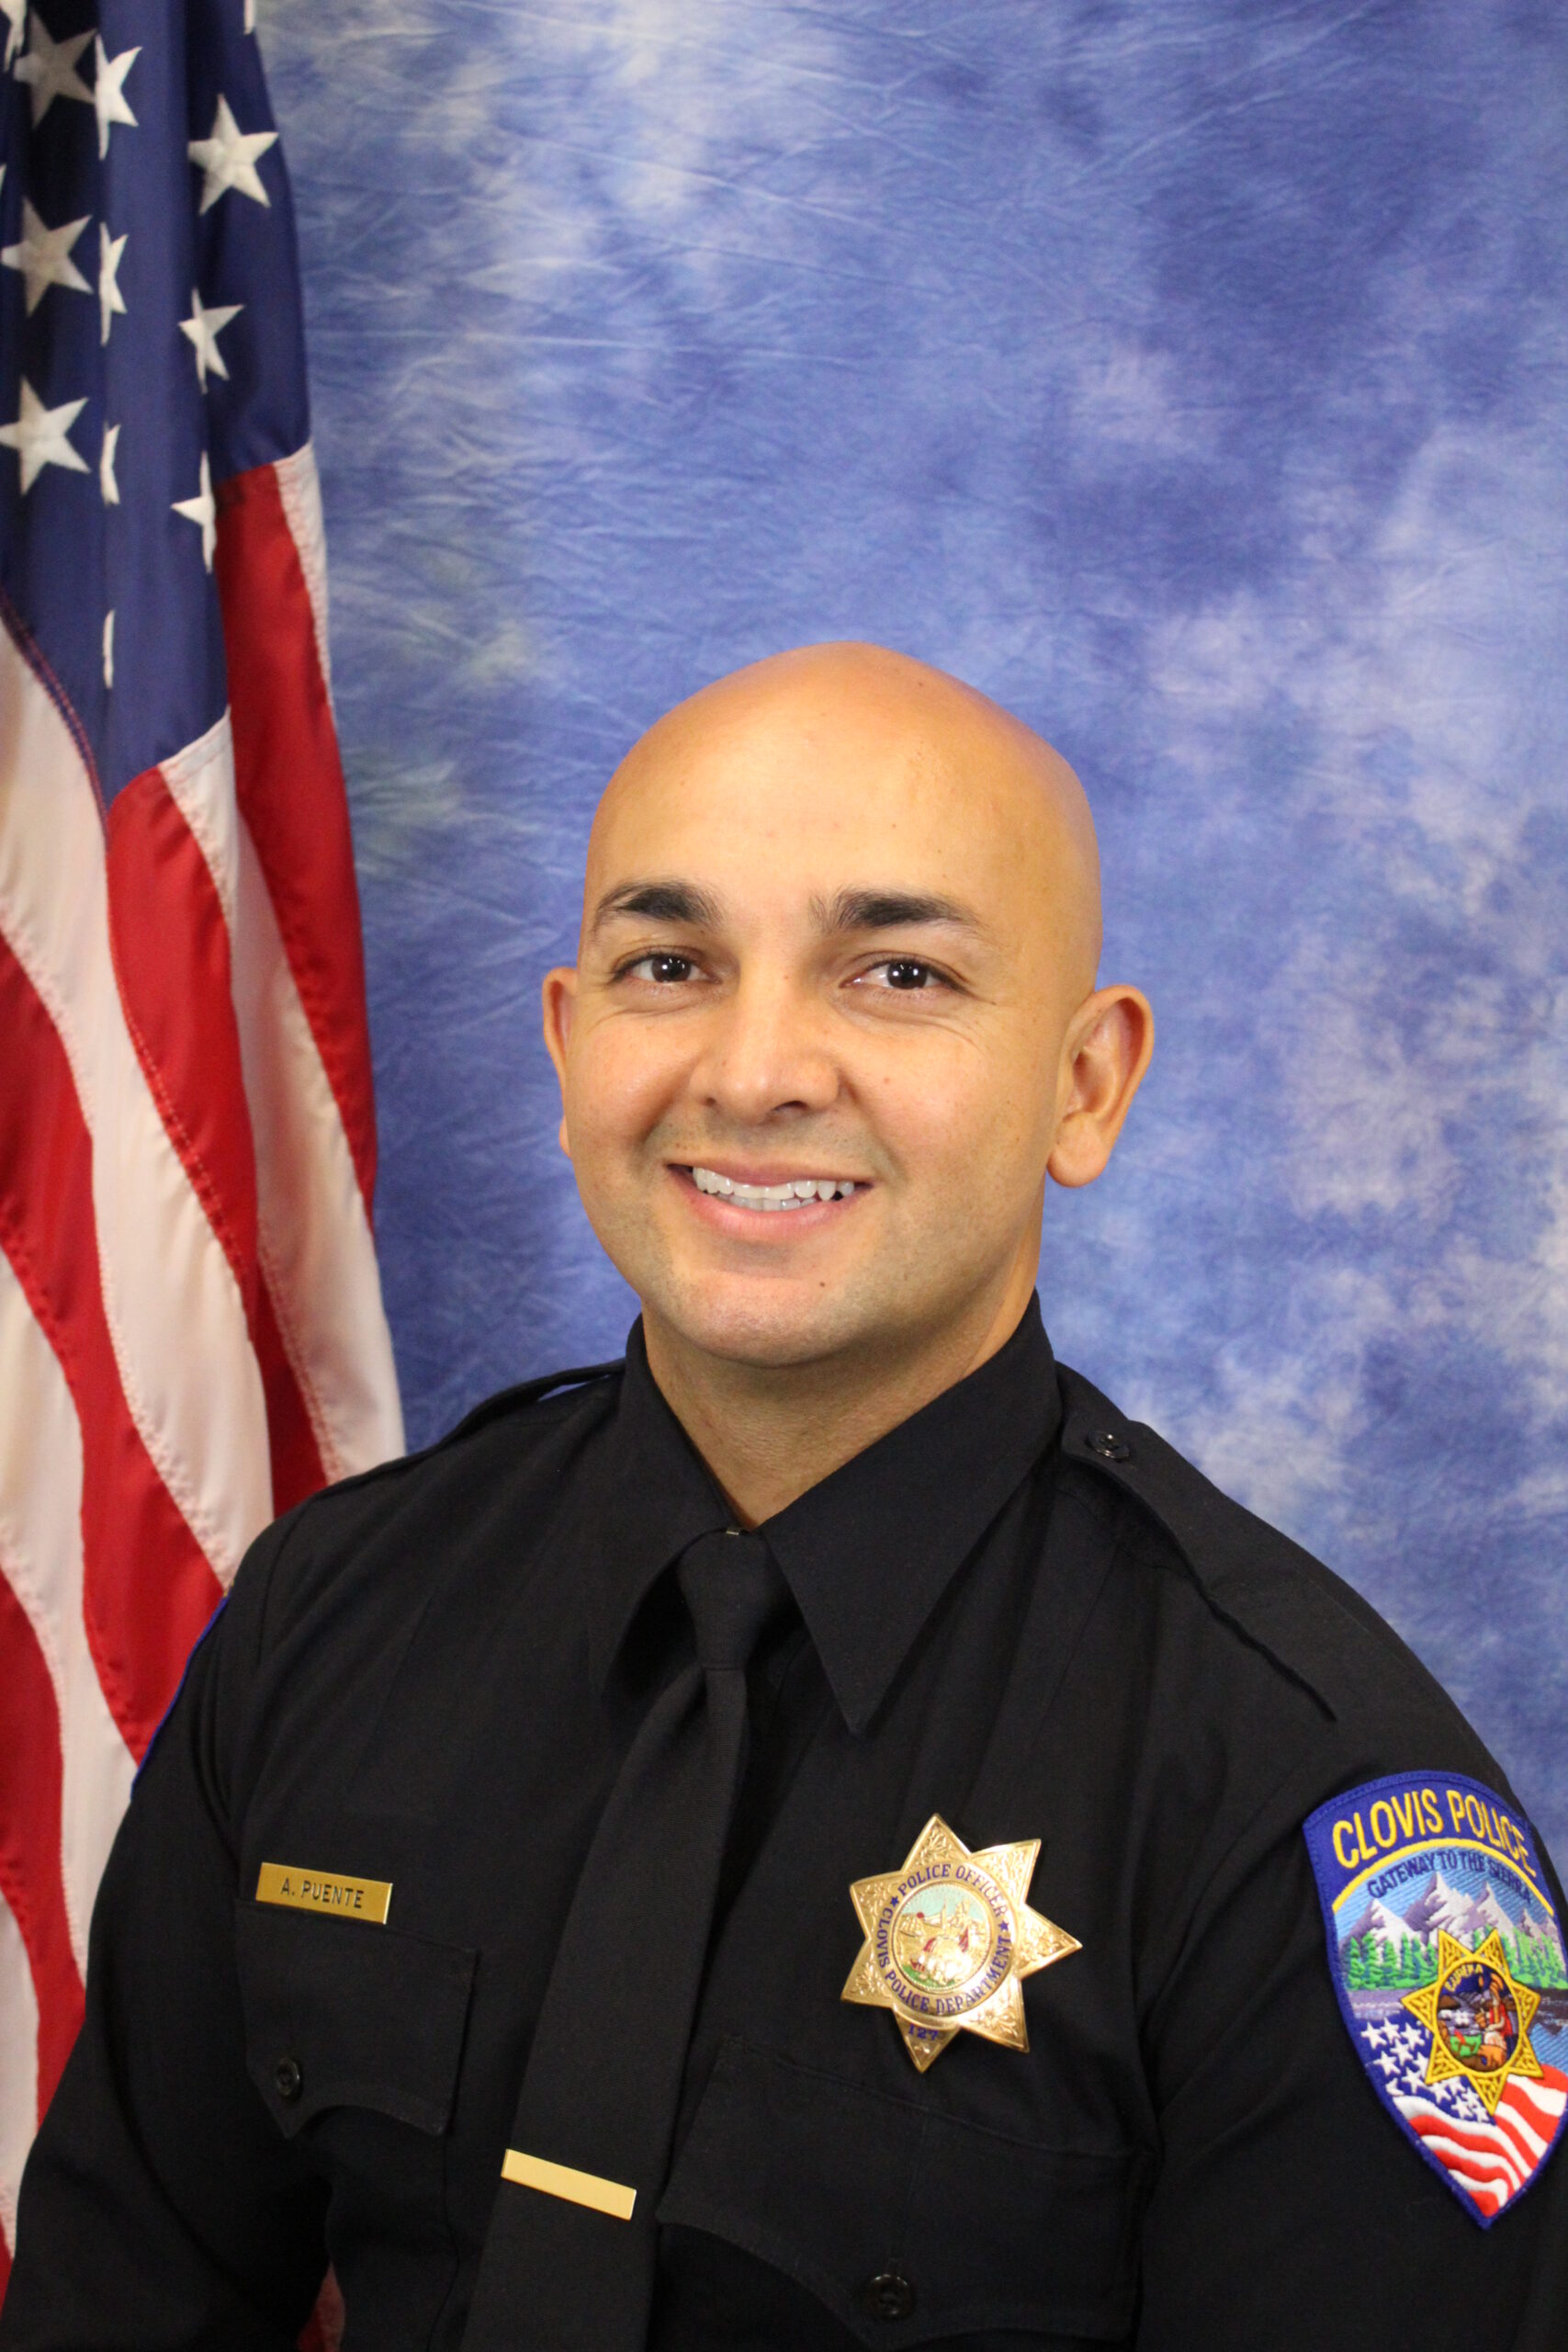 Portrait of Officer Puente